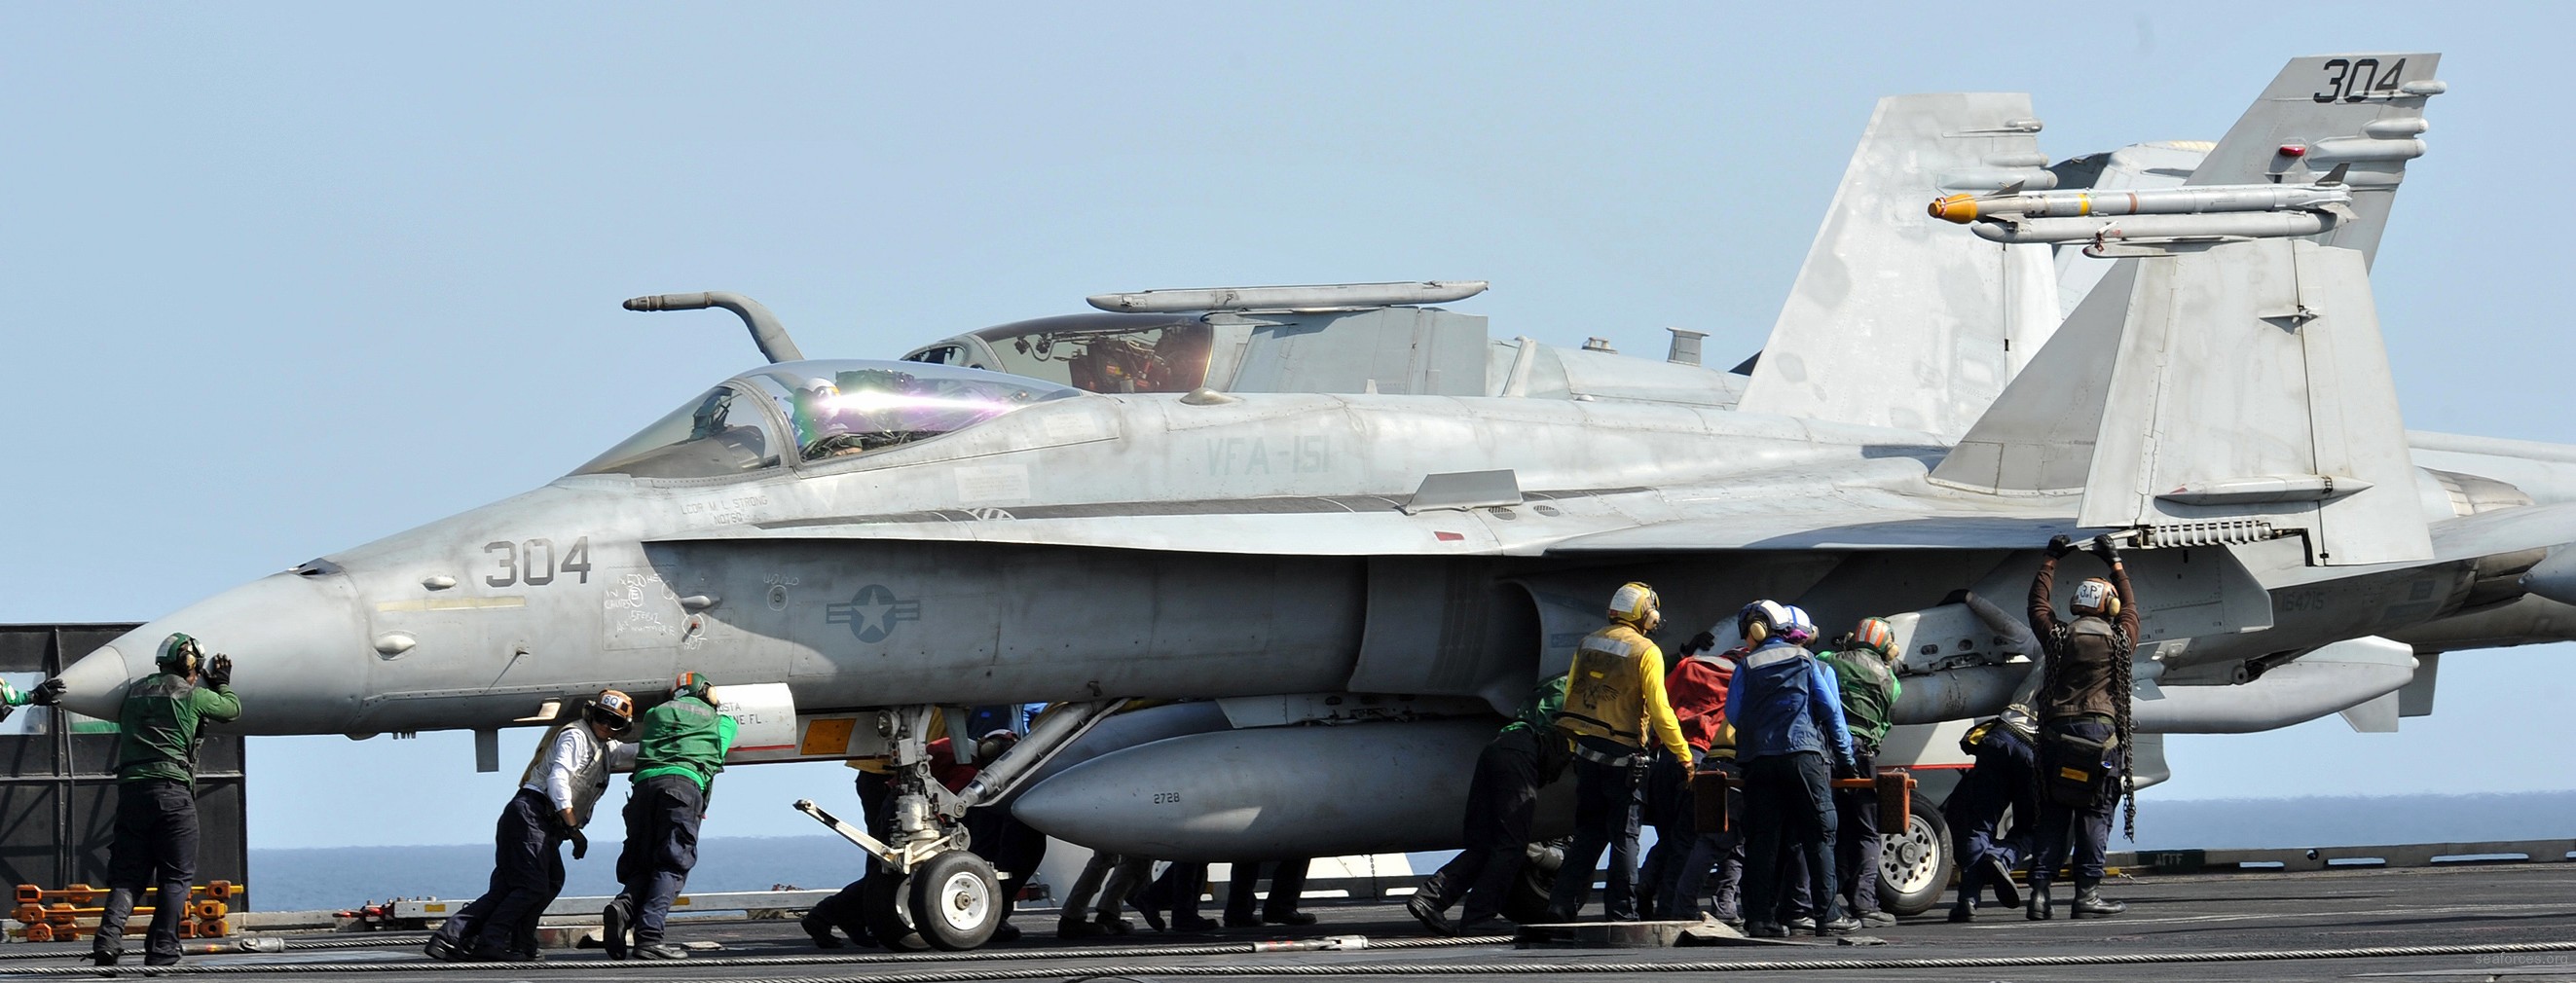 vfa-151 vigilantes strike fighter squadron navy f/a-18c hornet carrier air wing cvw-2 uss abraham lincoln cvn-72 41